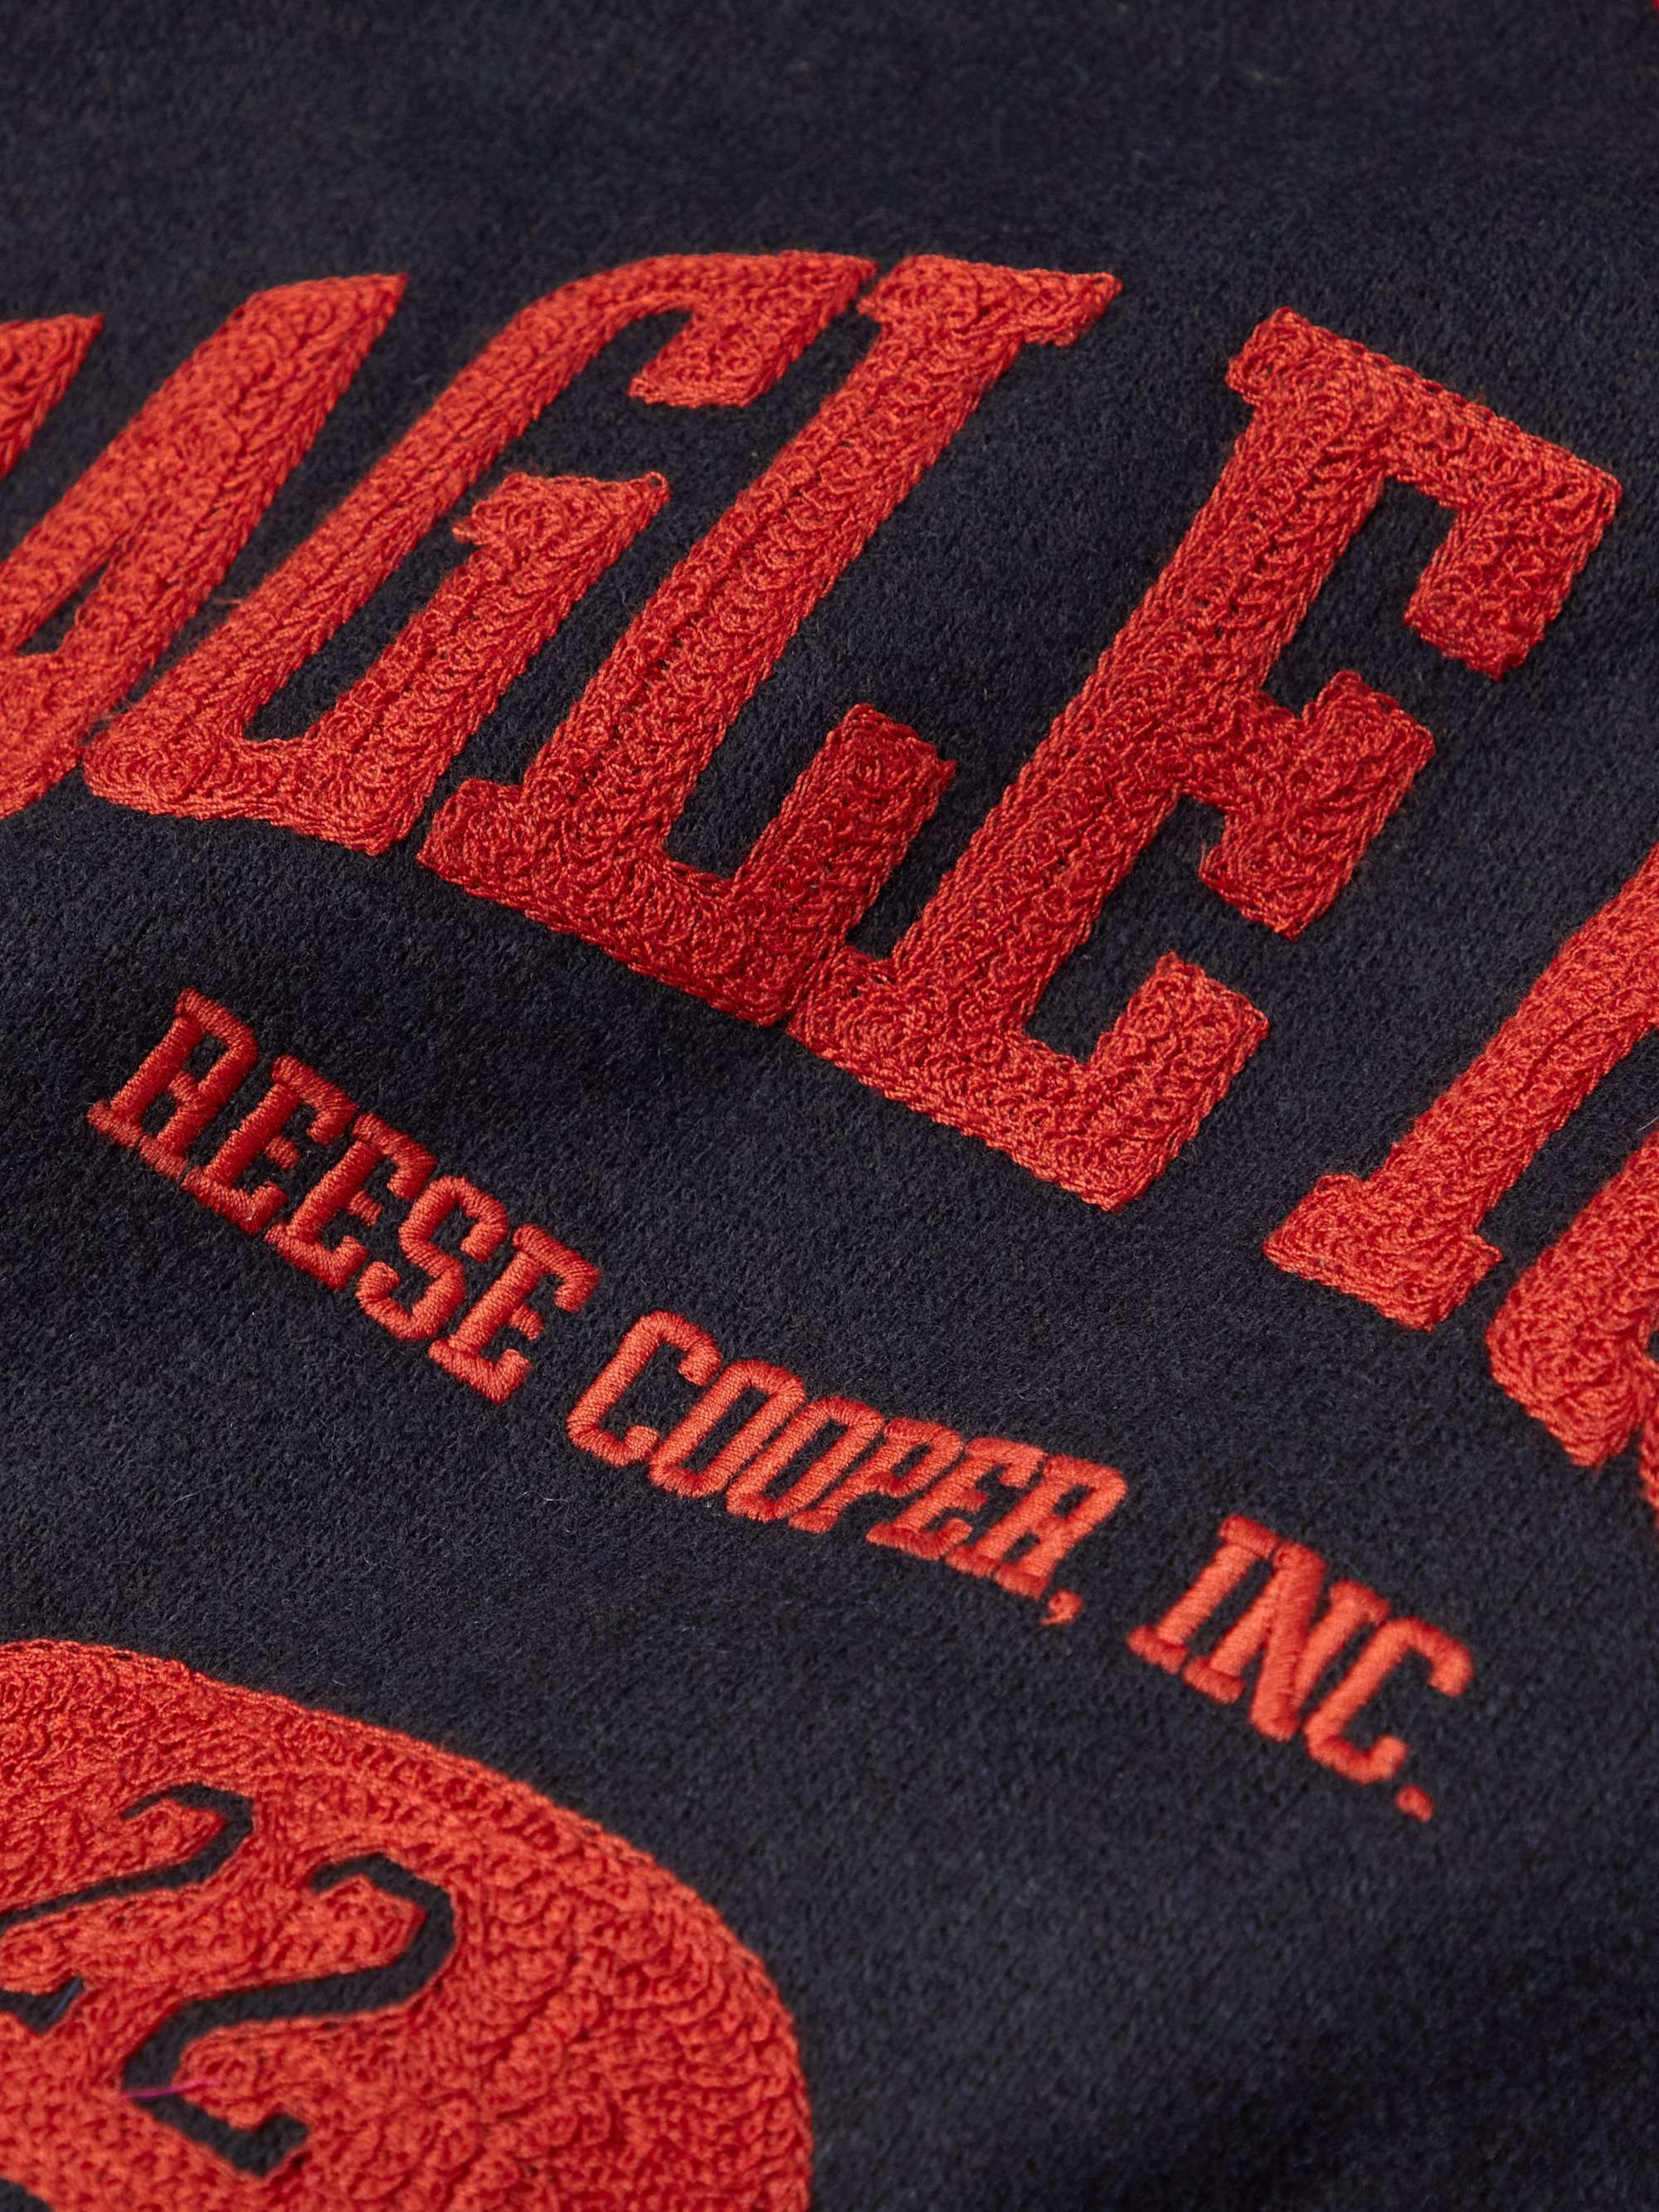 REESE COOPER® Two Steps Forward Appliquéd Wool-Blend Felt and Leather Varsity Jacket